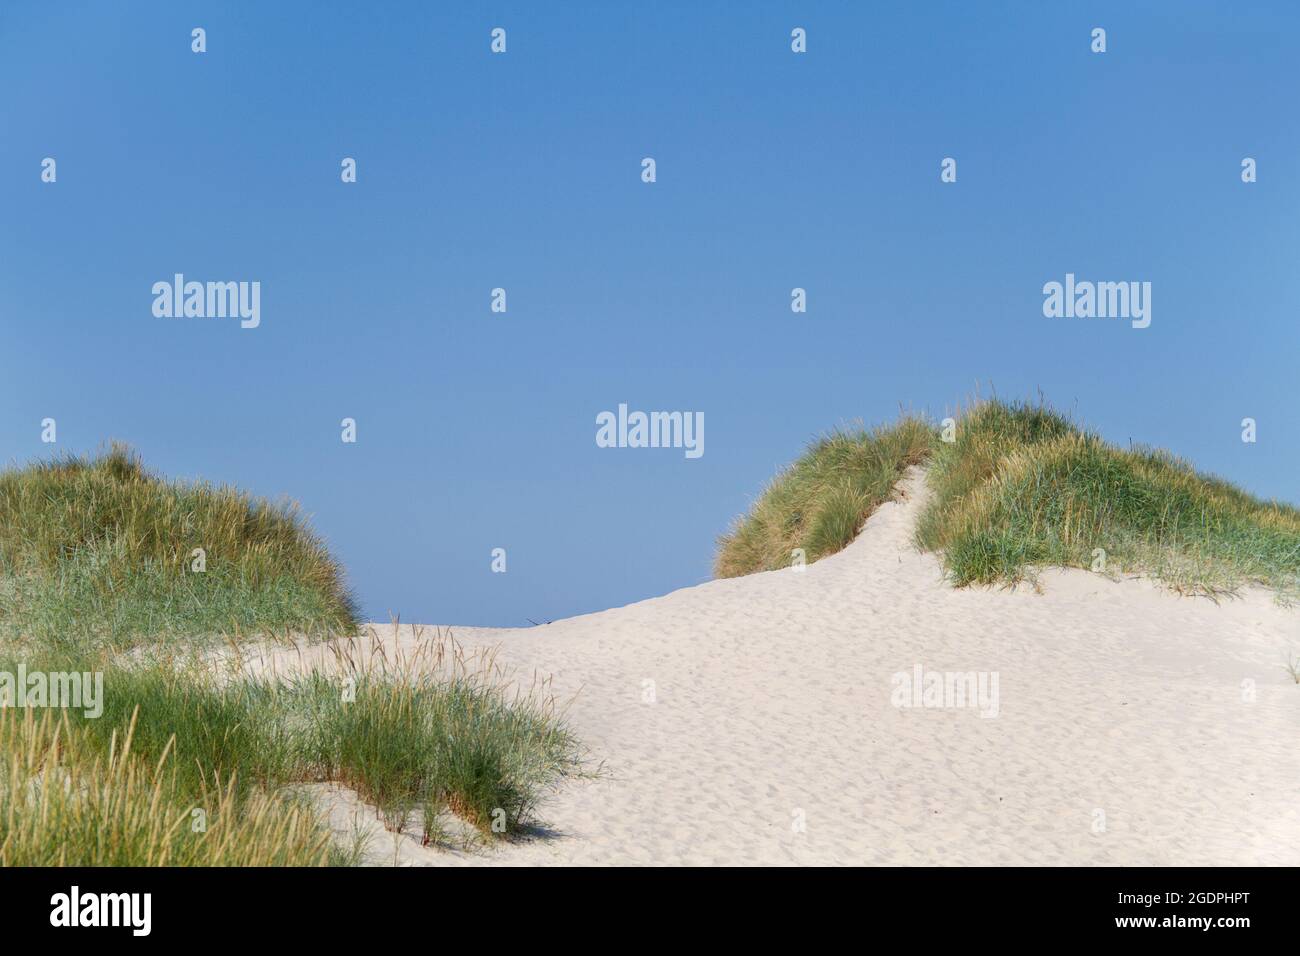 Sandy dunes grown with Marram grass against a clear blue sky Stock Photo